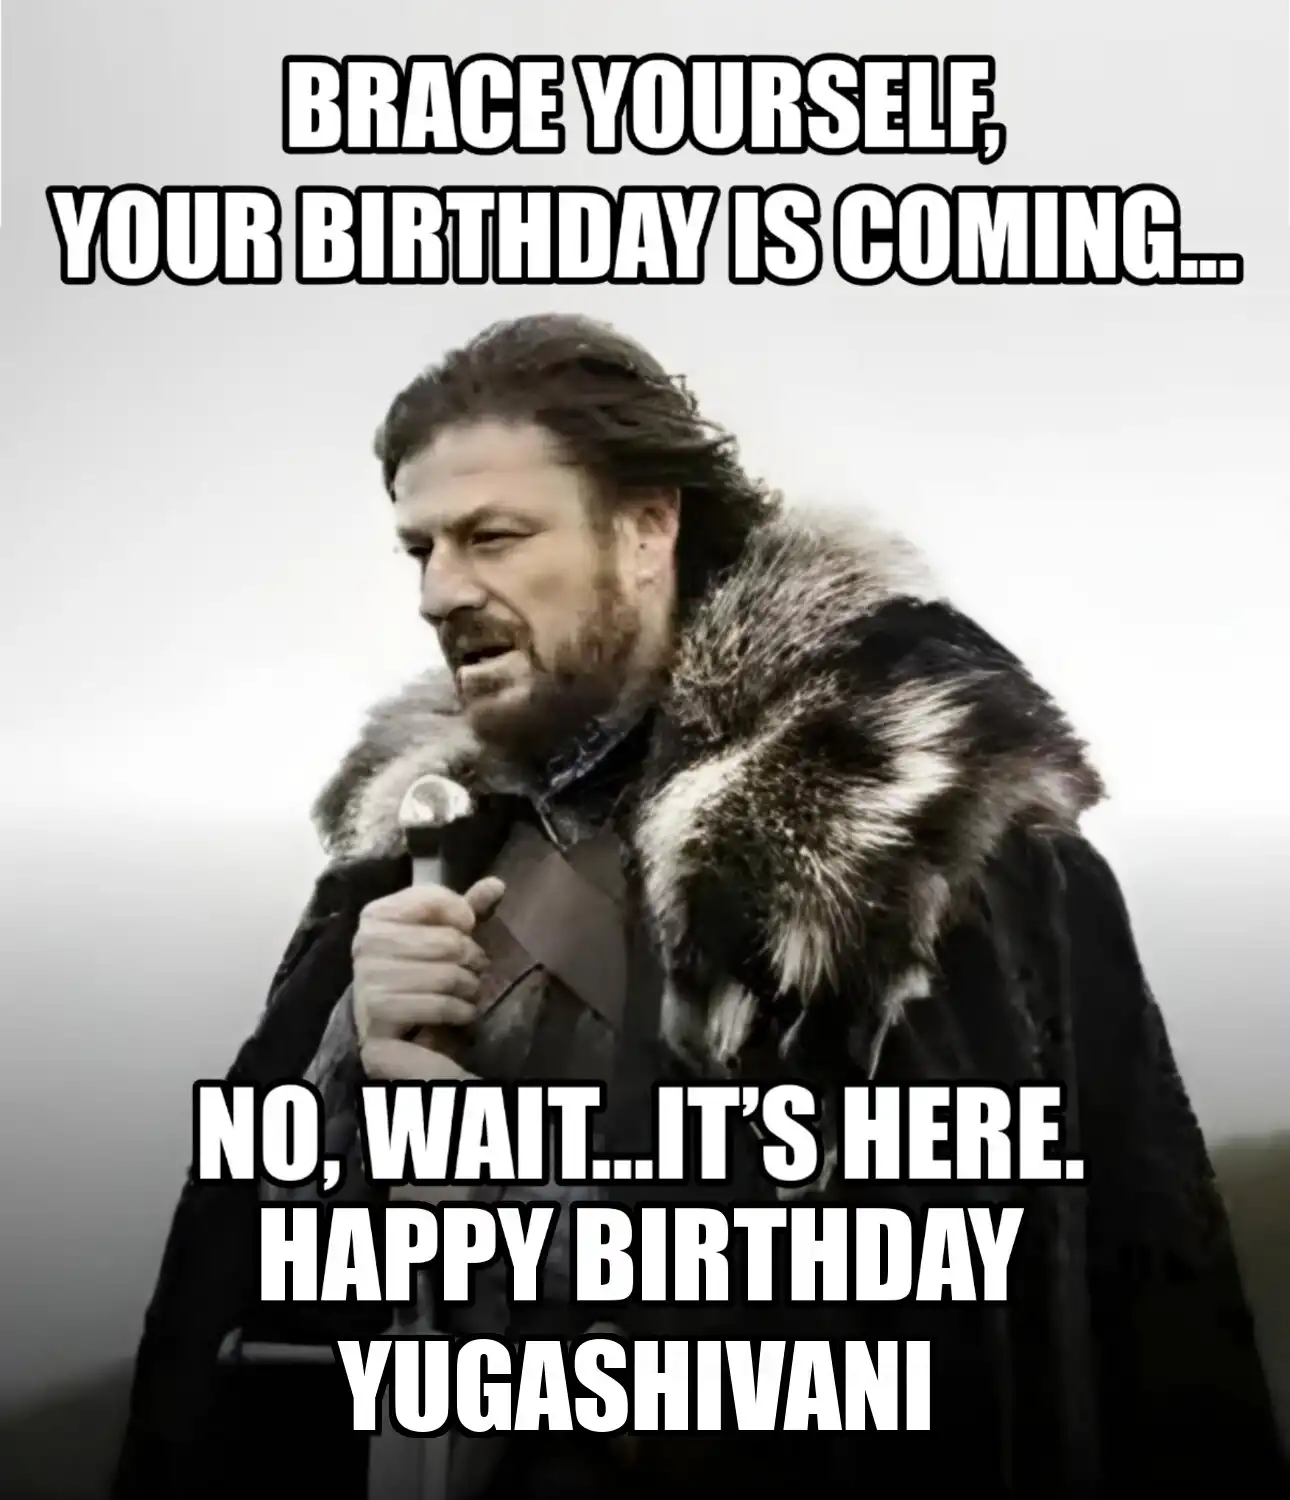 Happy Birthday Yugashivani Brace Yourself Your Birthday Is Coming Meme